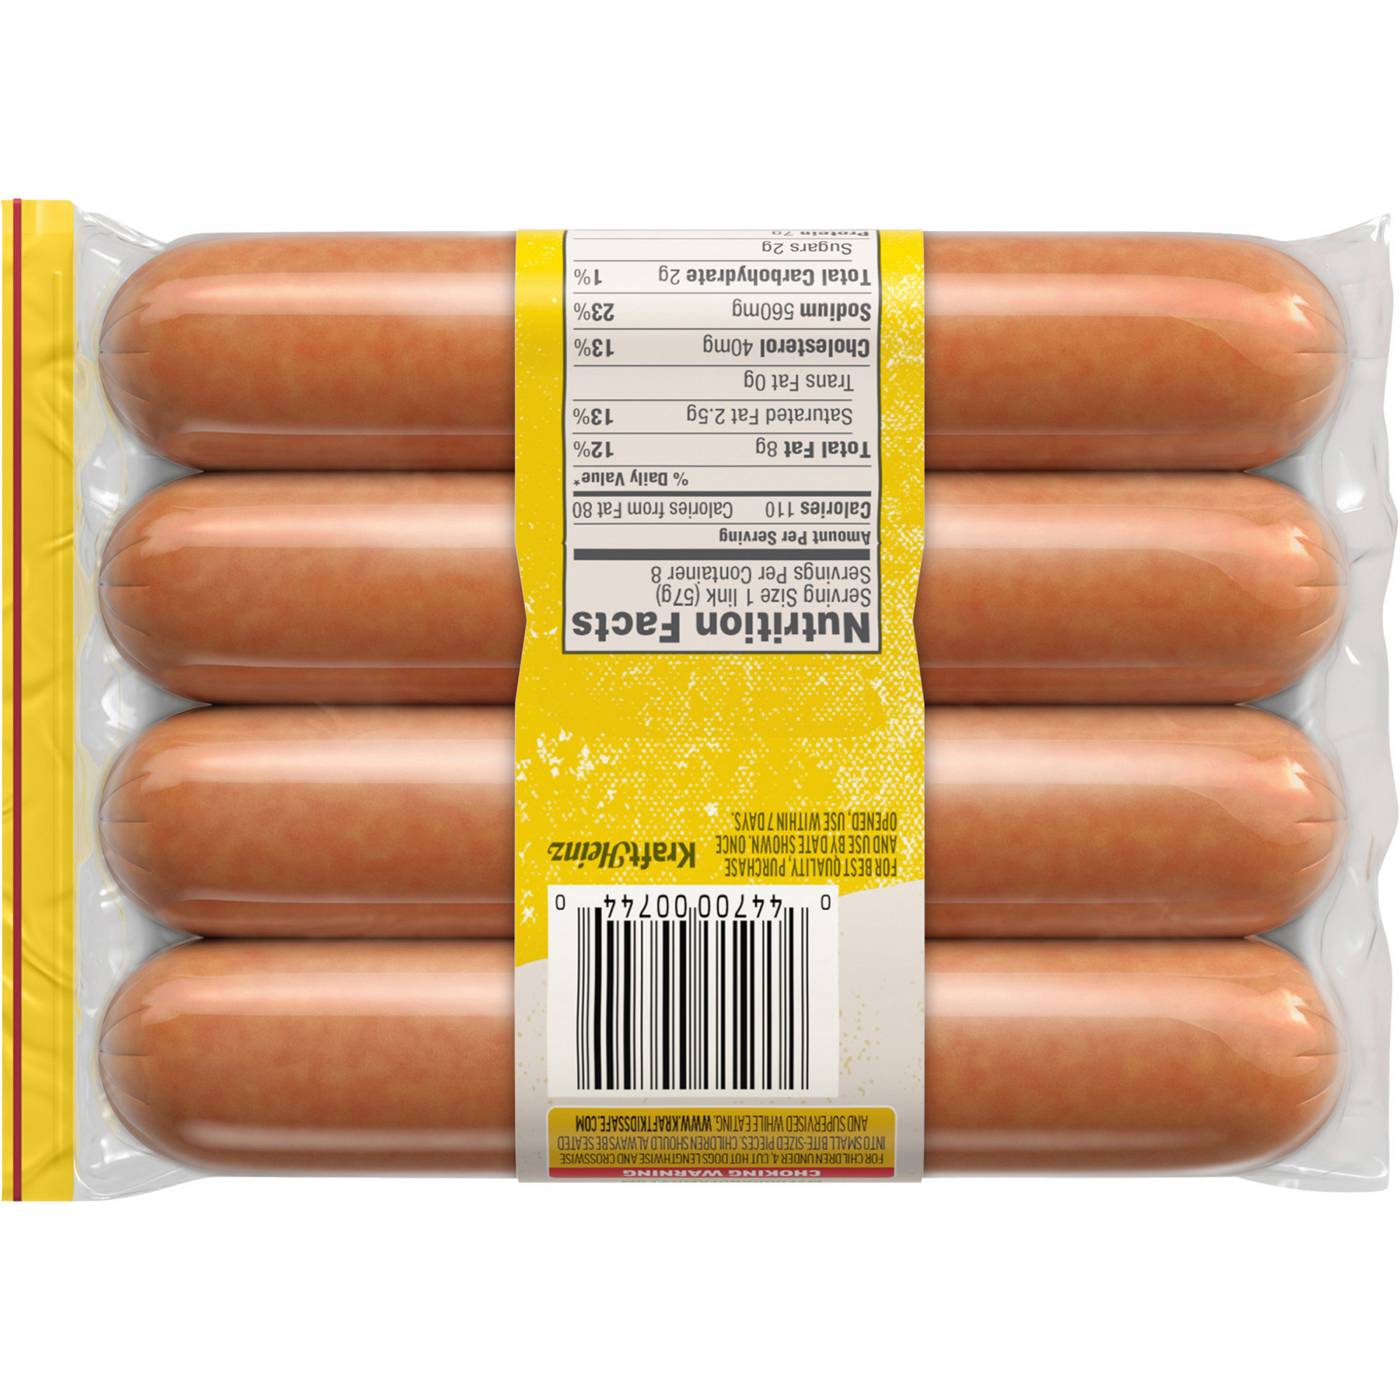 Oscar Mayer Natural Uncured Turkey Franks Hot Dogs; image 4 of 5